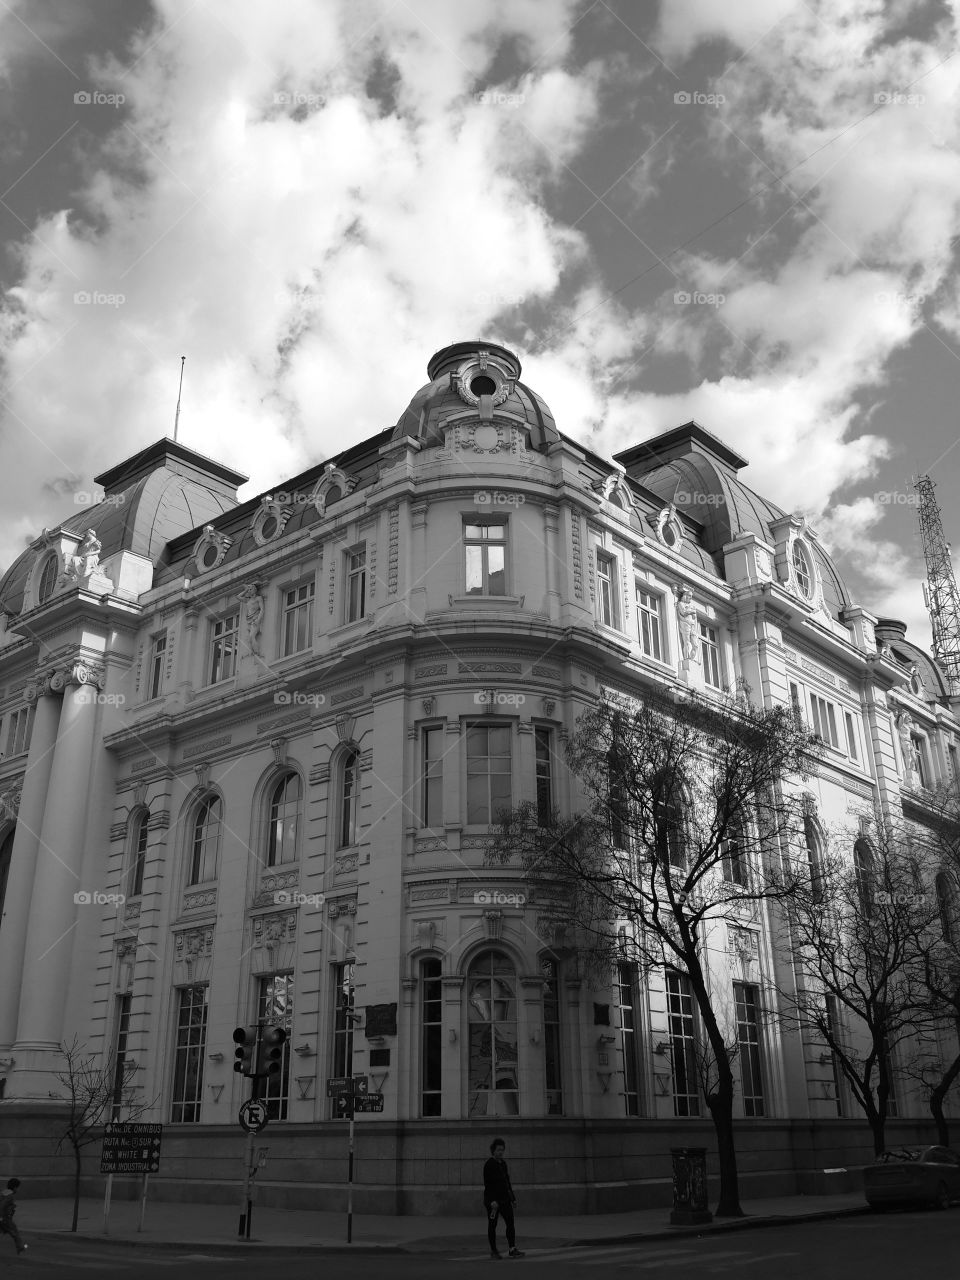 historic building in Argentina